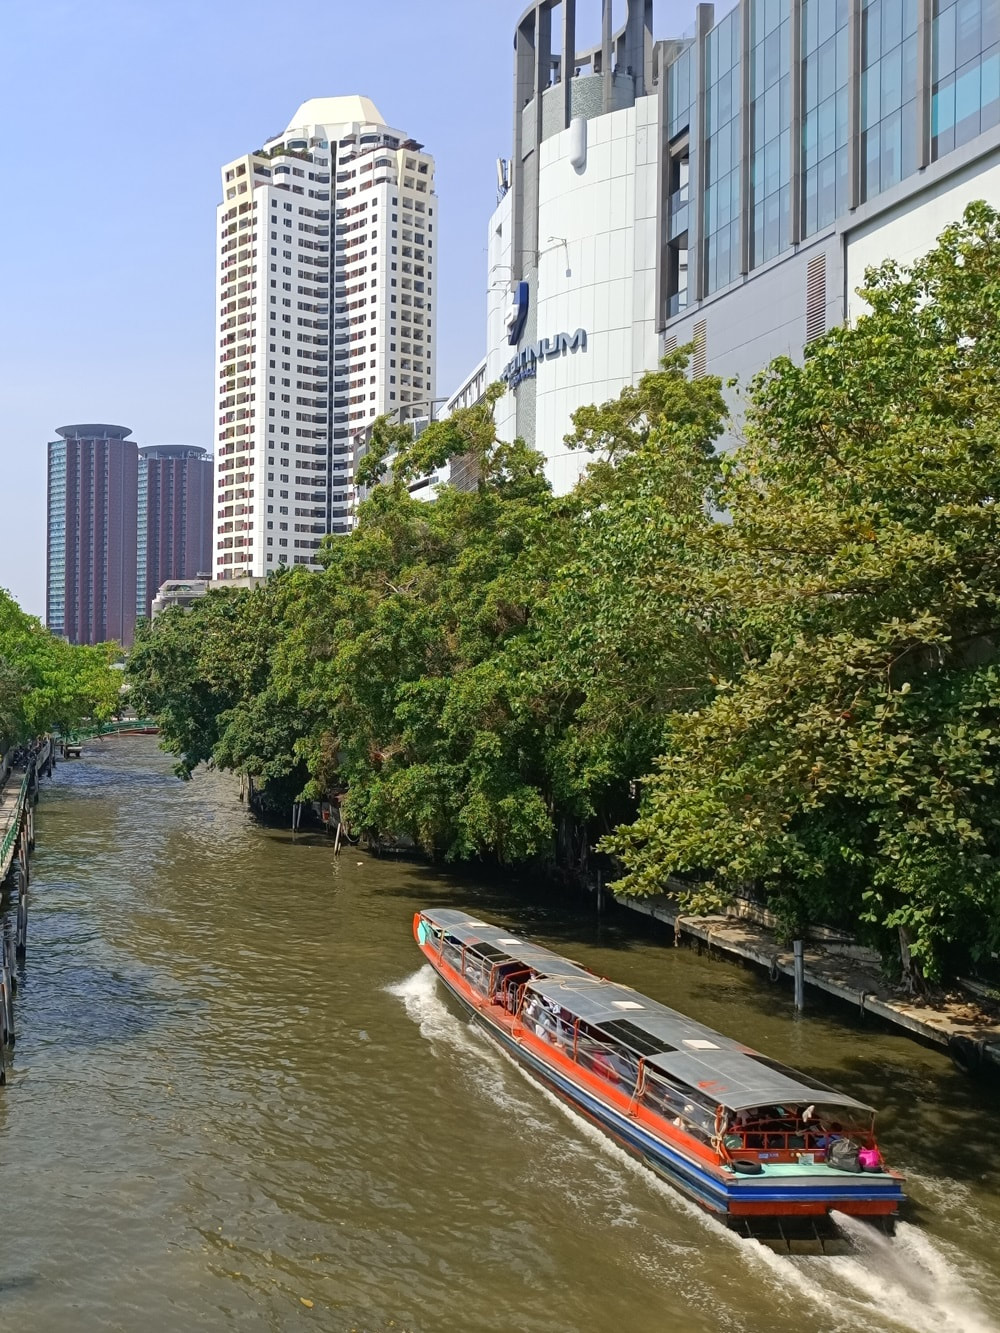 Canal in Bangkok. Photo credits Thierry Hanan Scheers.